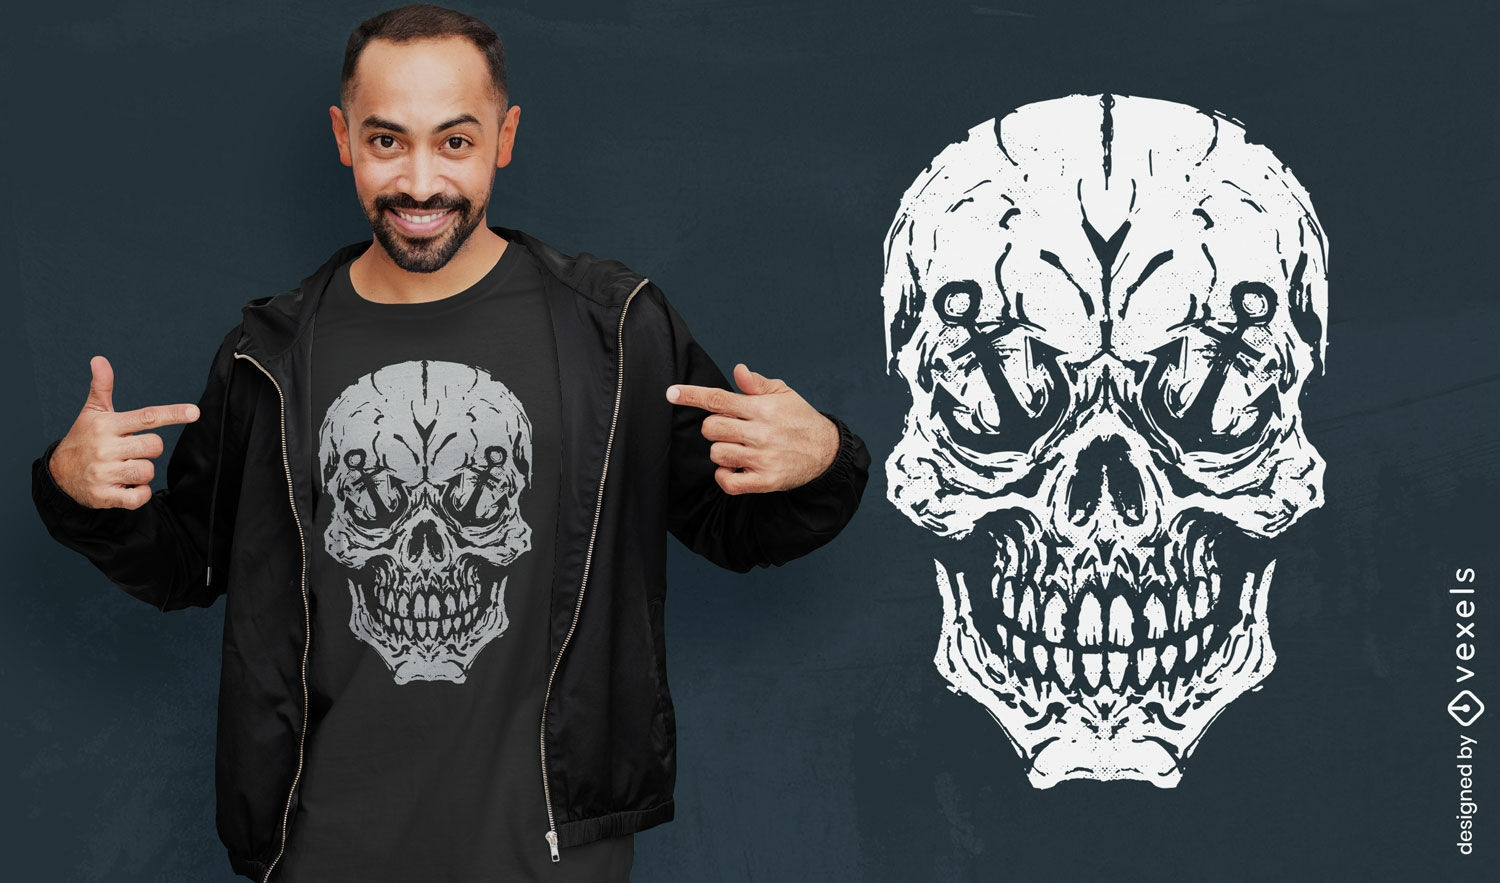 Skull with anchor eyes t-shirt design